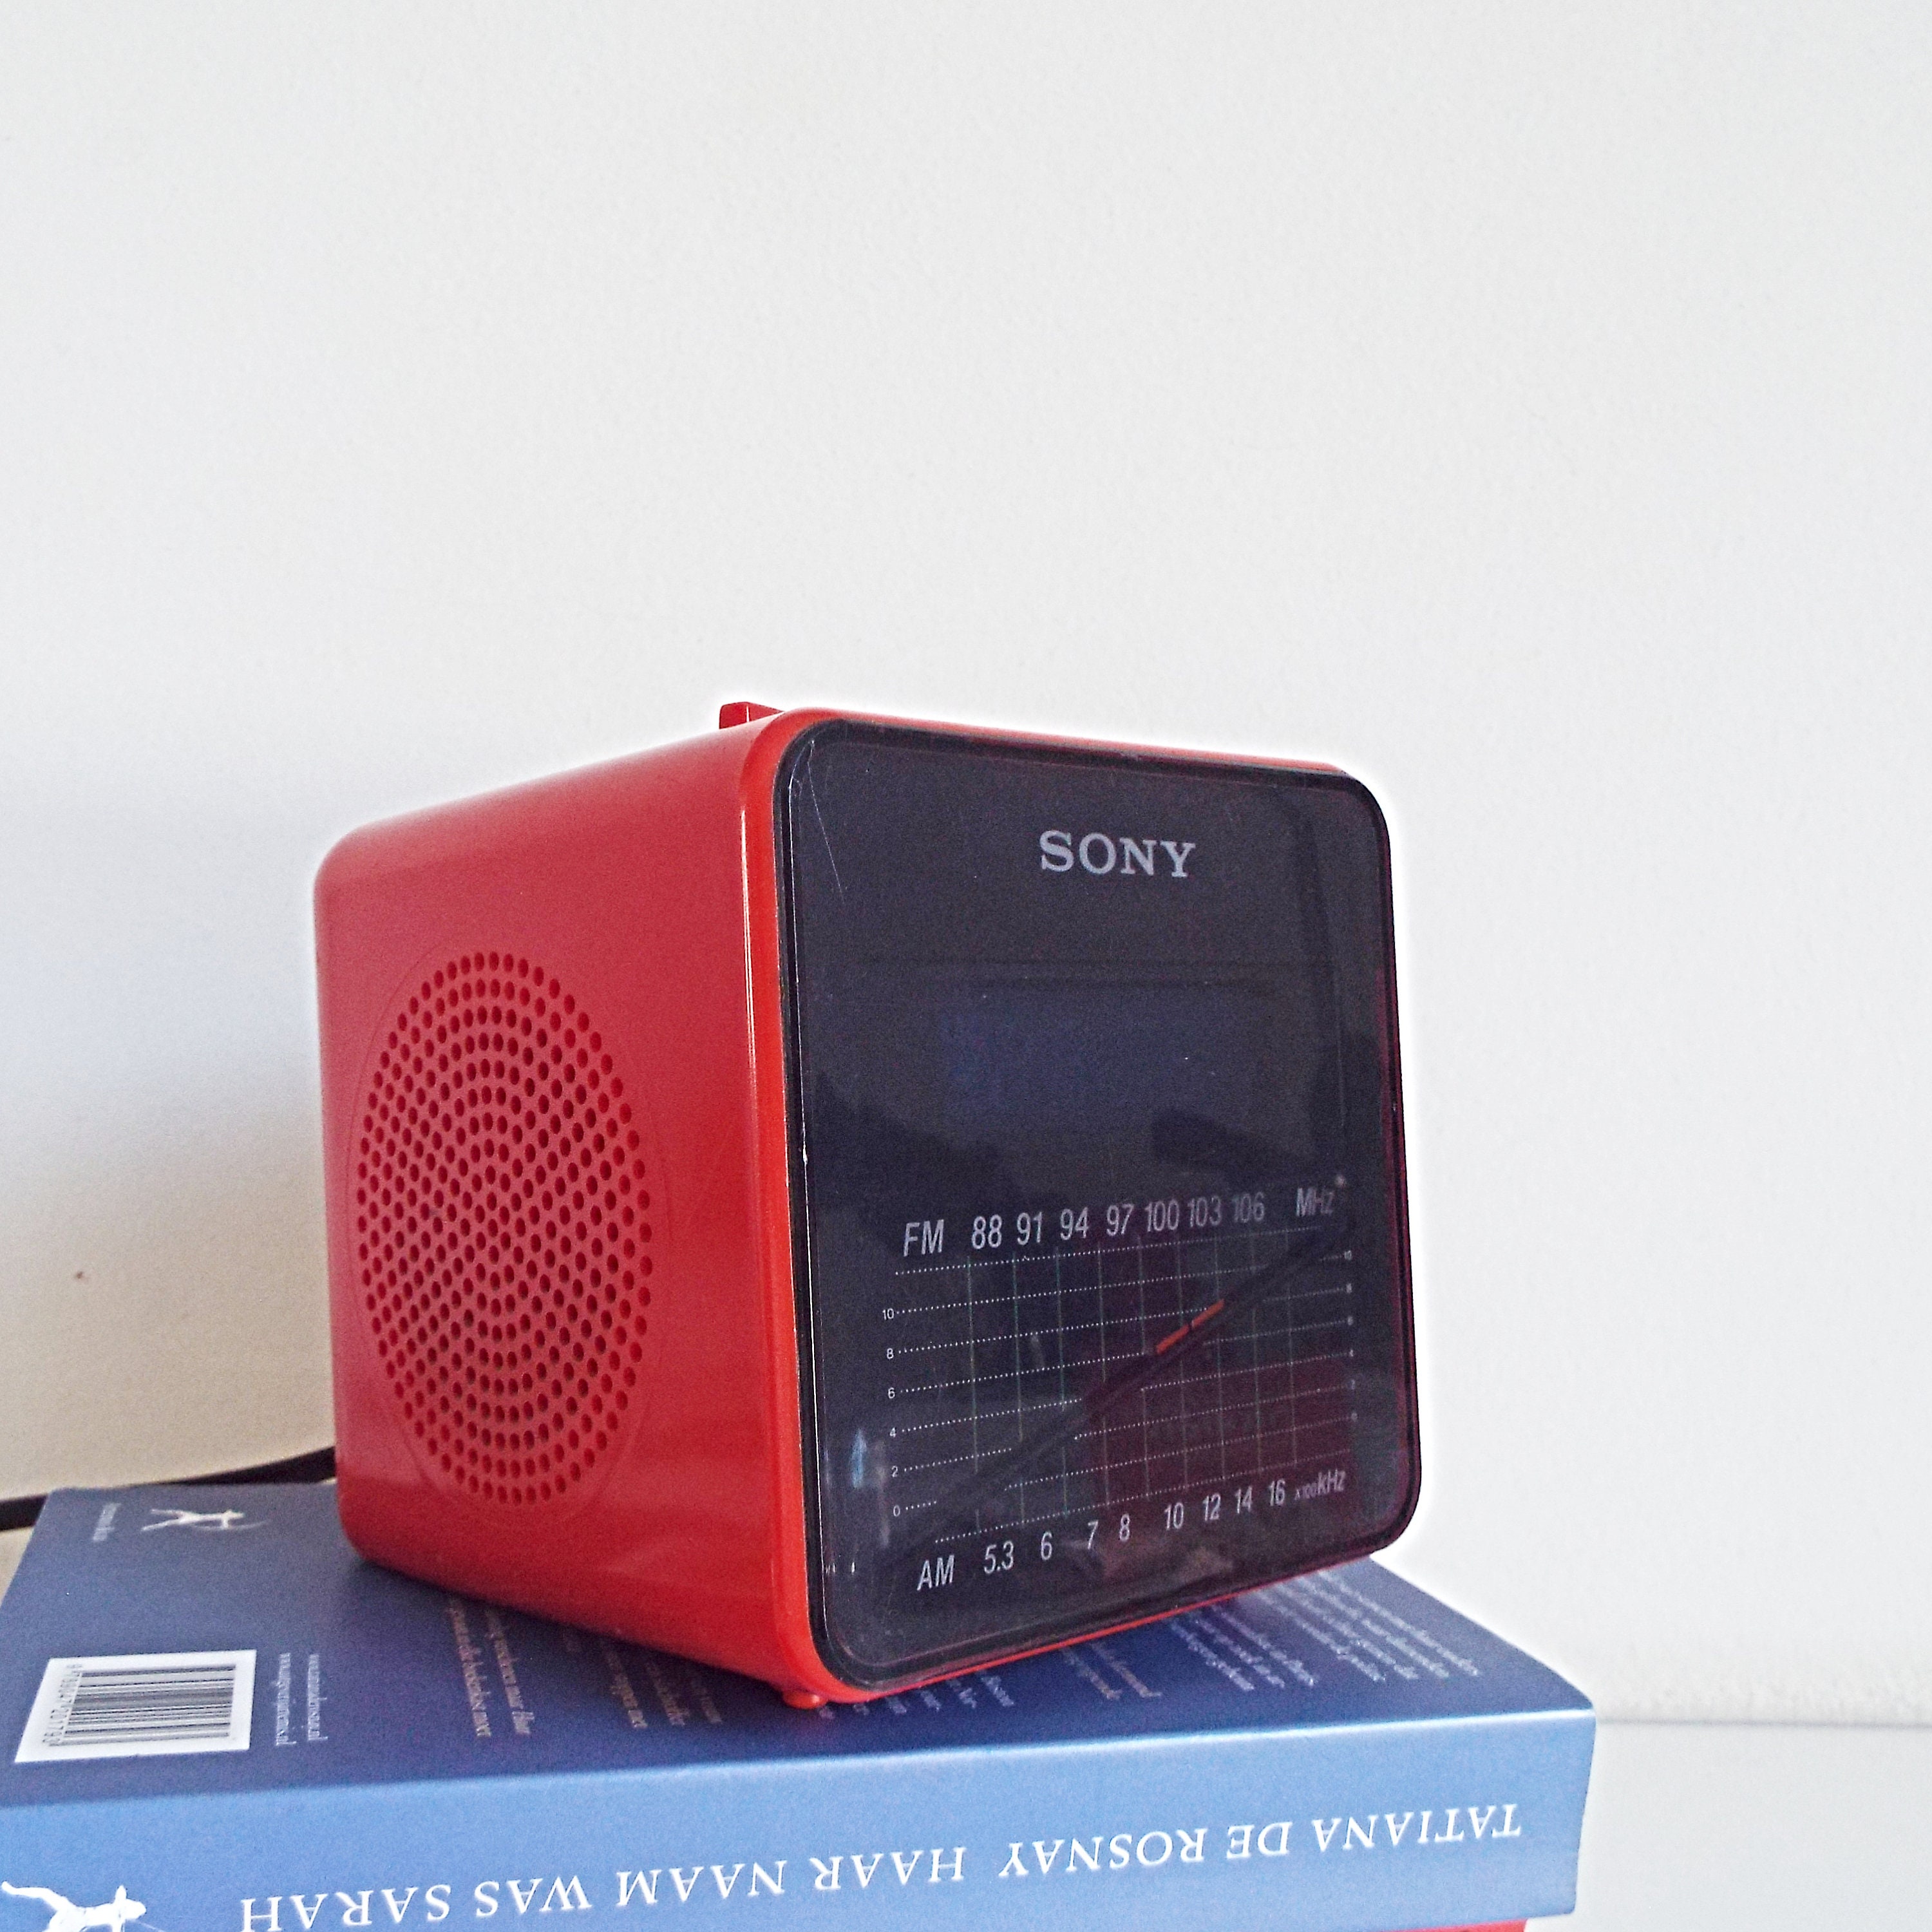 Radio-réveil Sony Digicube rouge ICF-C10W - 1980